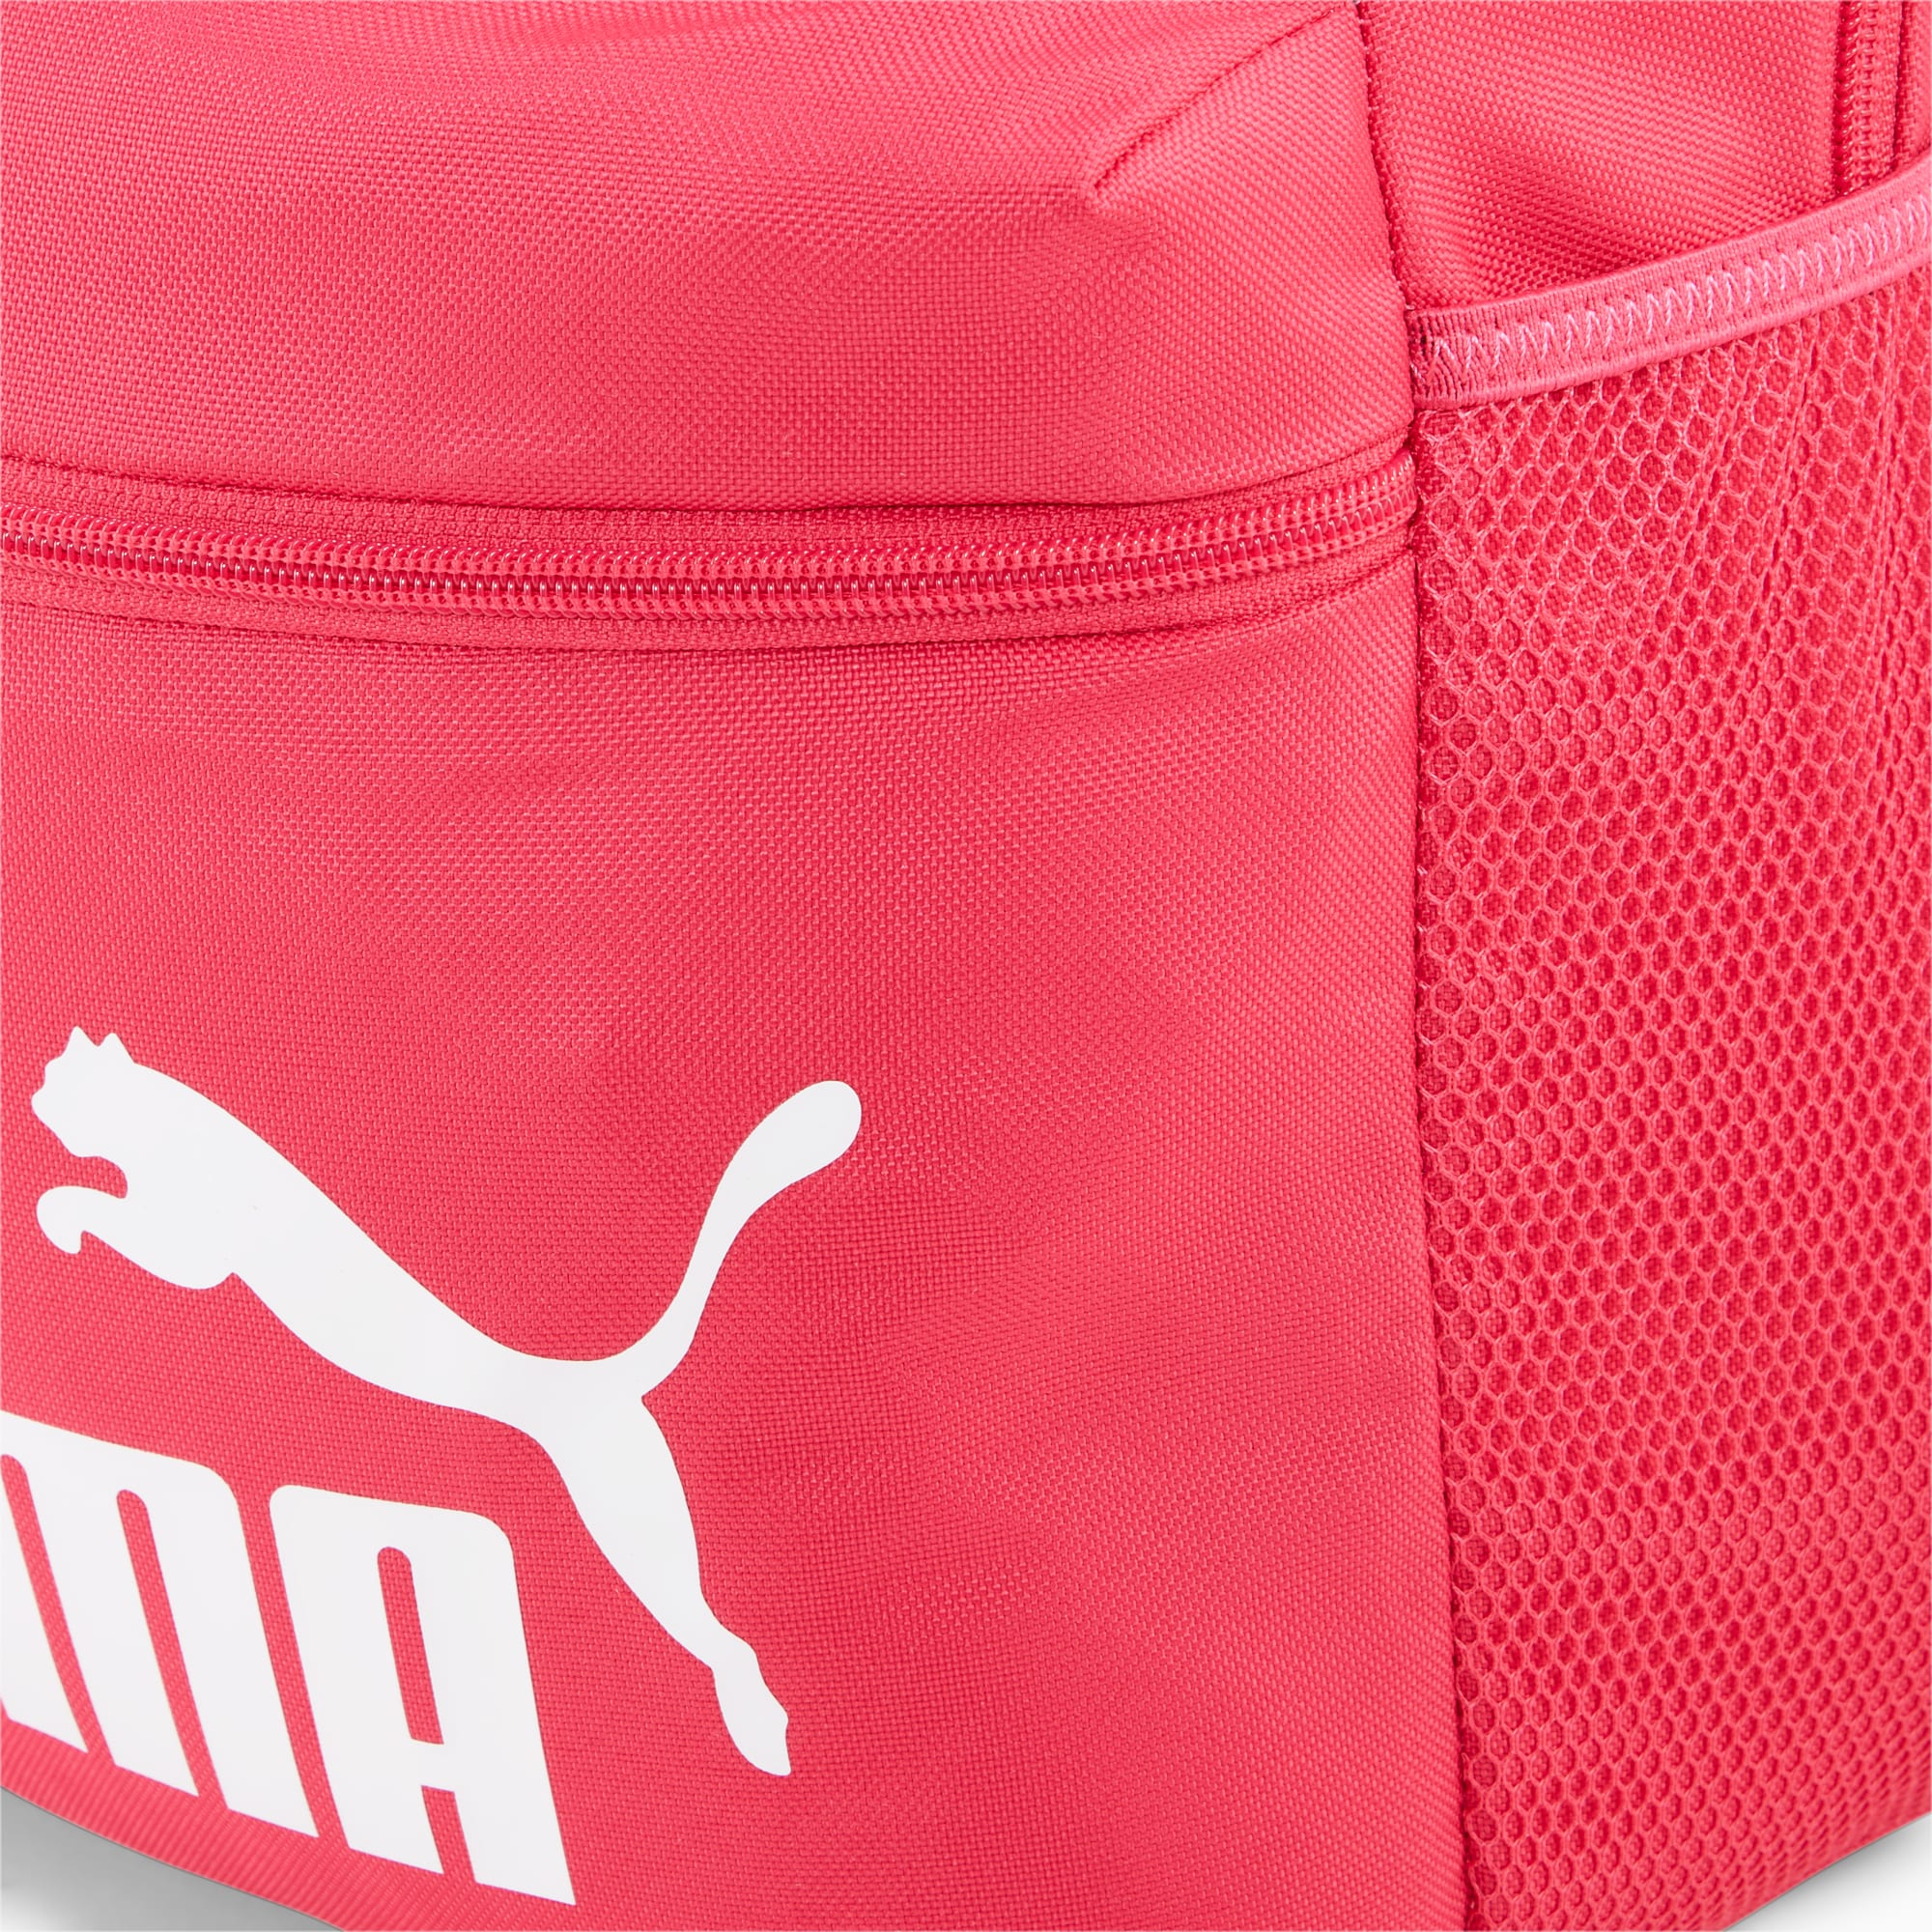 PUMA PUMA Phase Backpack Unisex - Garnet Rose - Maat OSFA